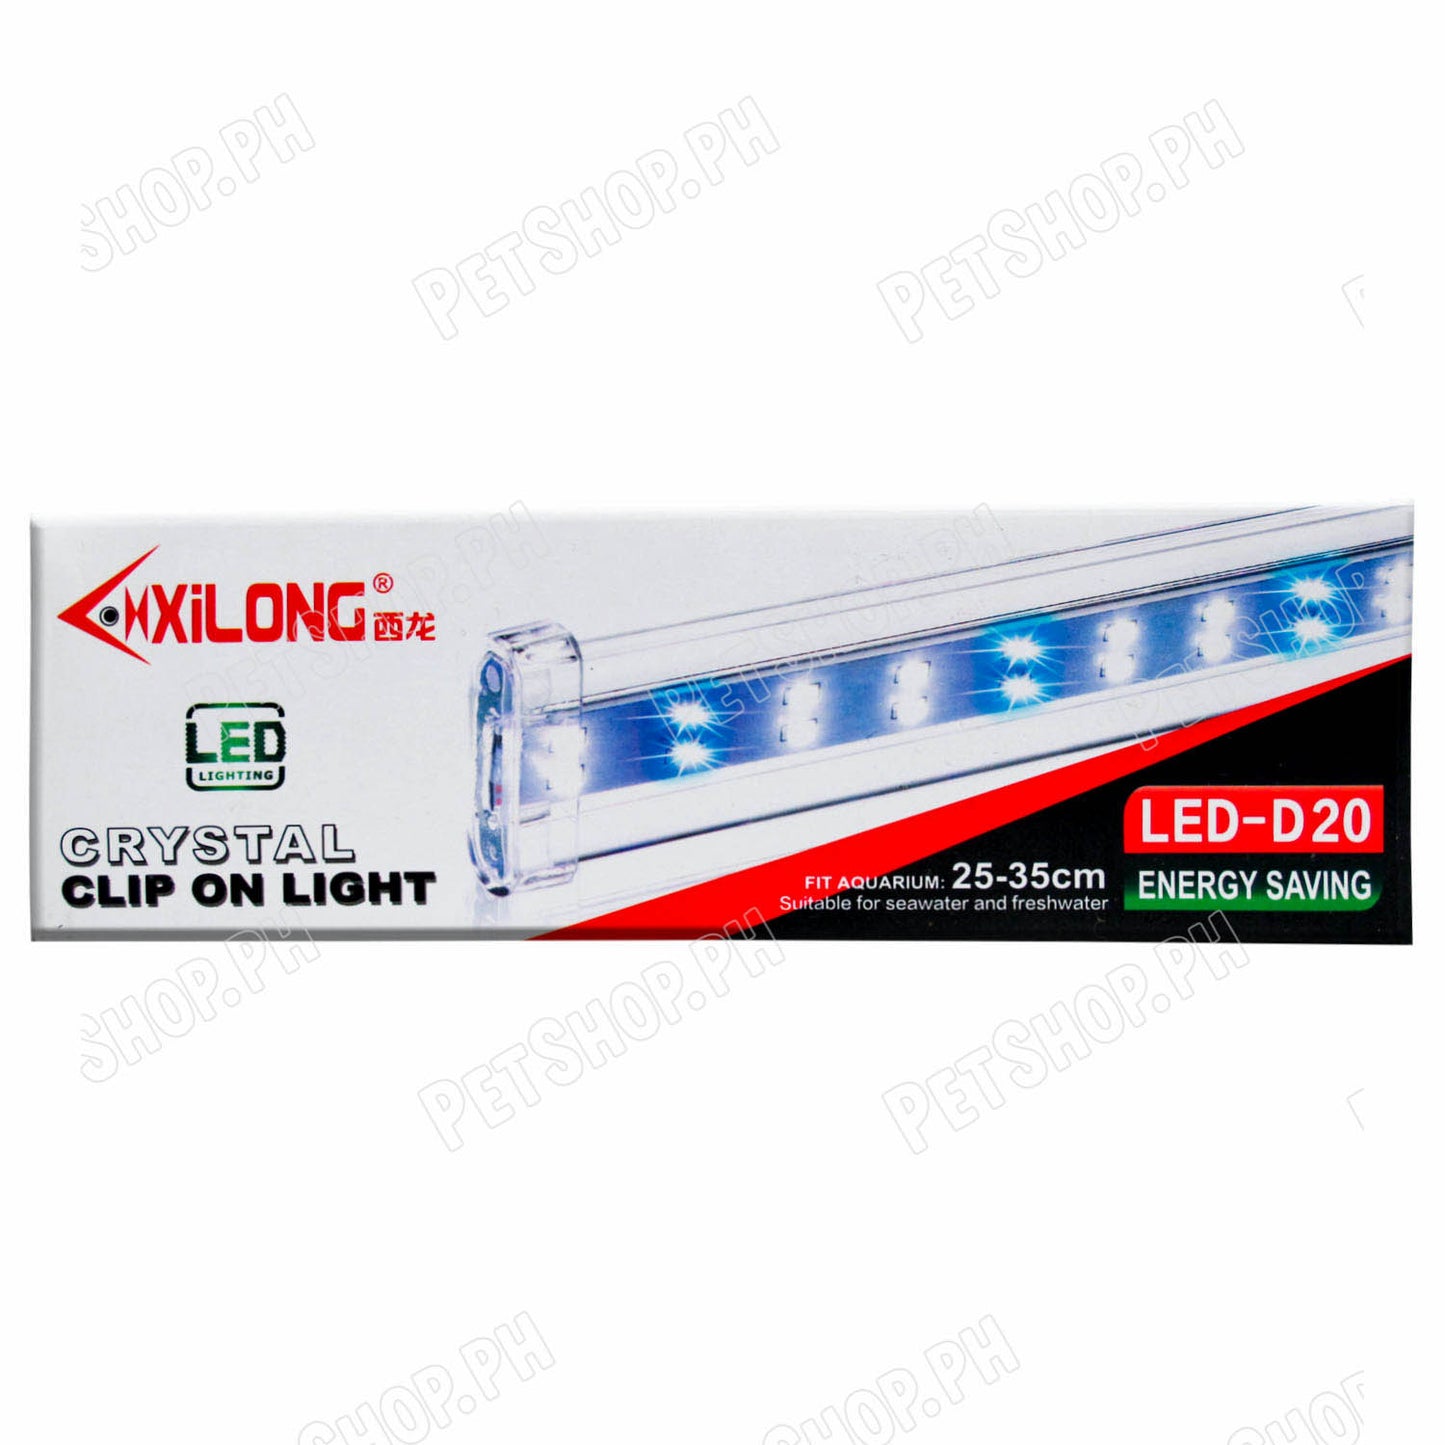 LED-D20 Crystal Clip on Light  6w